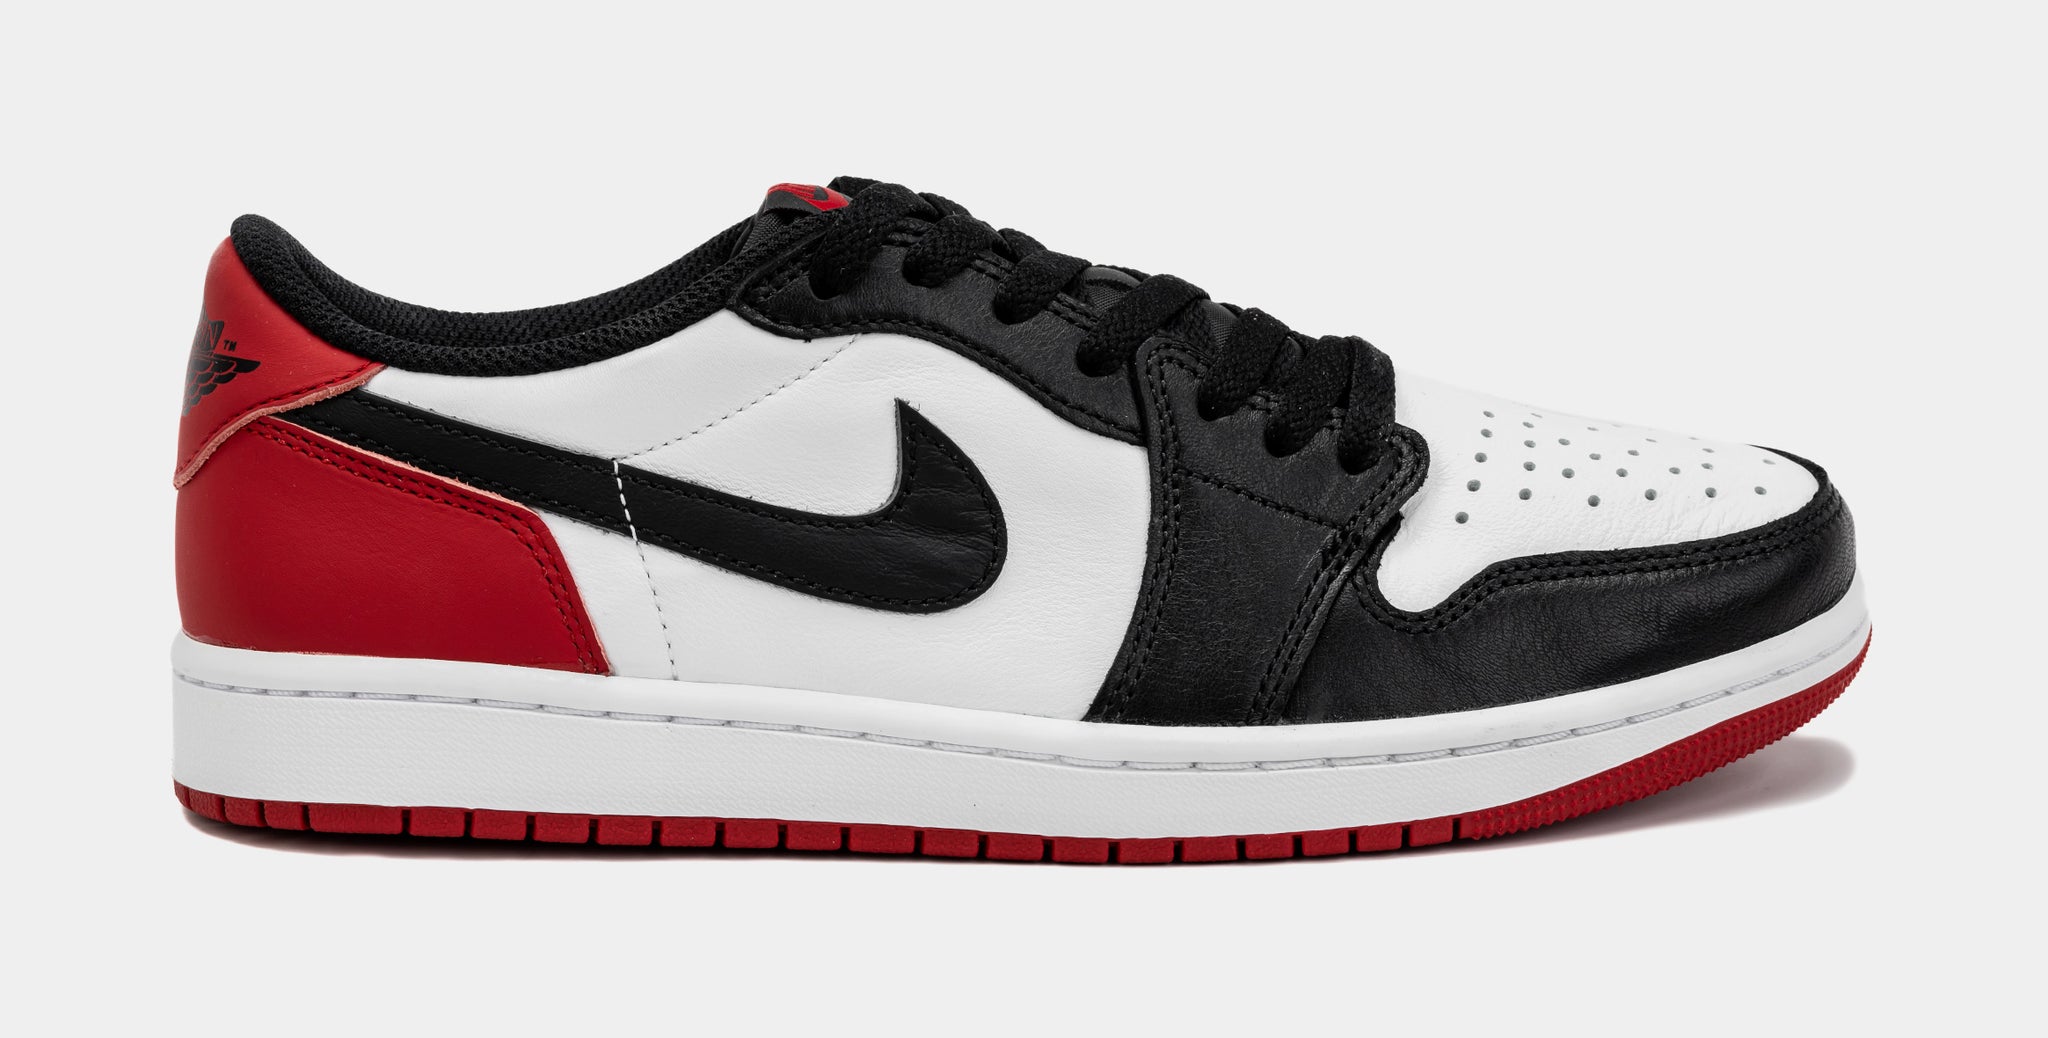 Air Jordan 1 Retro Low OG Black Toe Mens Lifestyle Shoes (Black/Red)